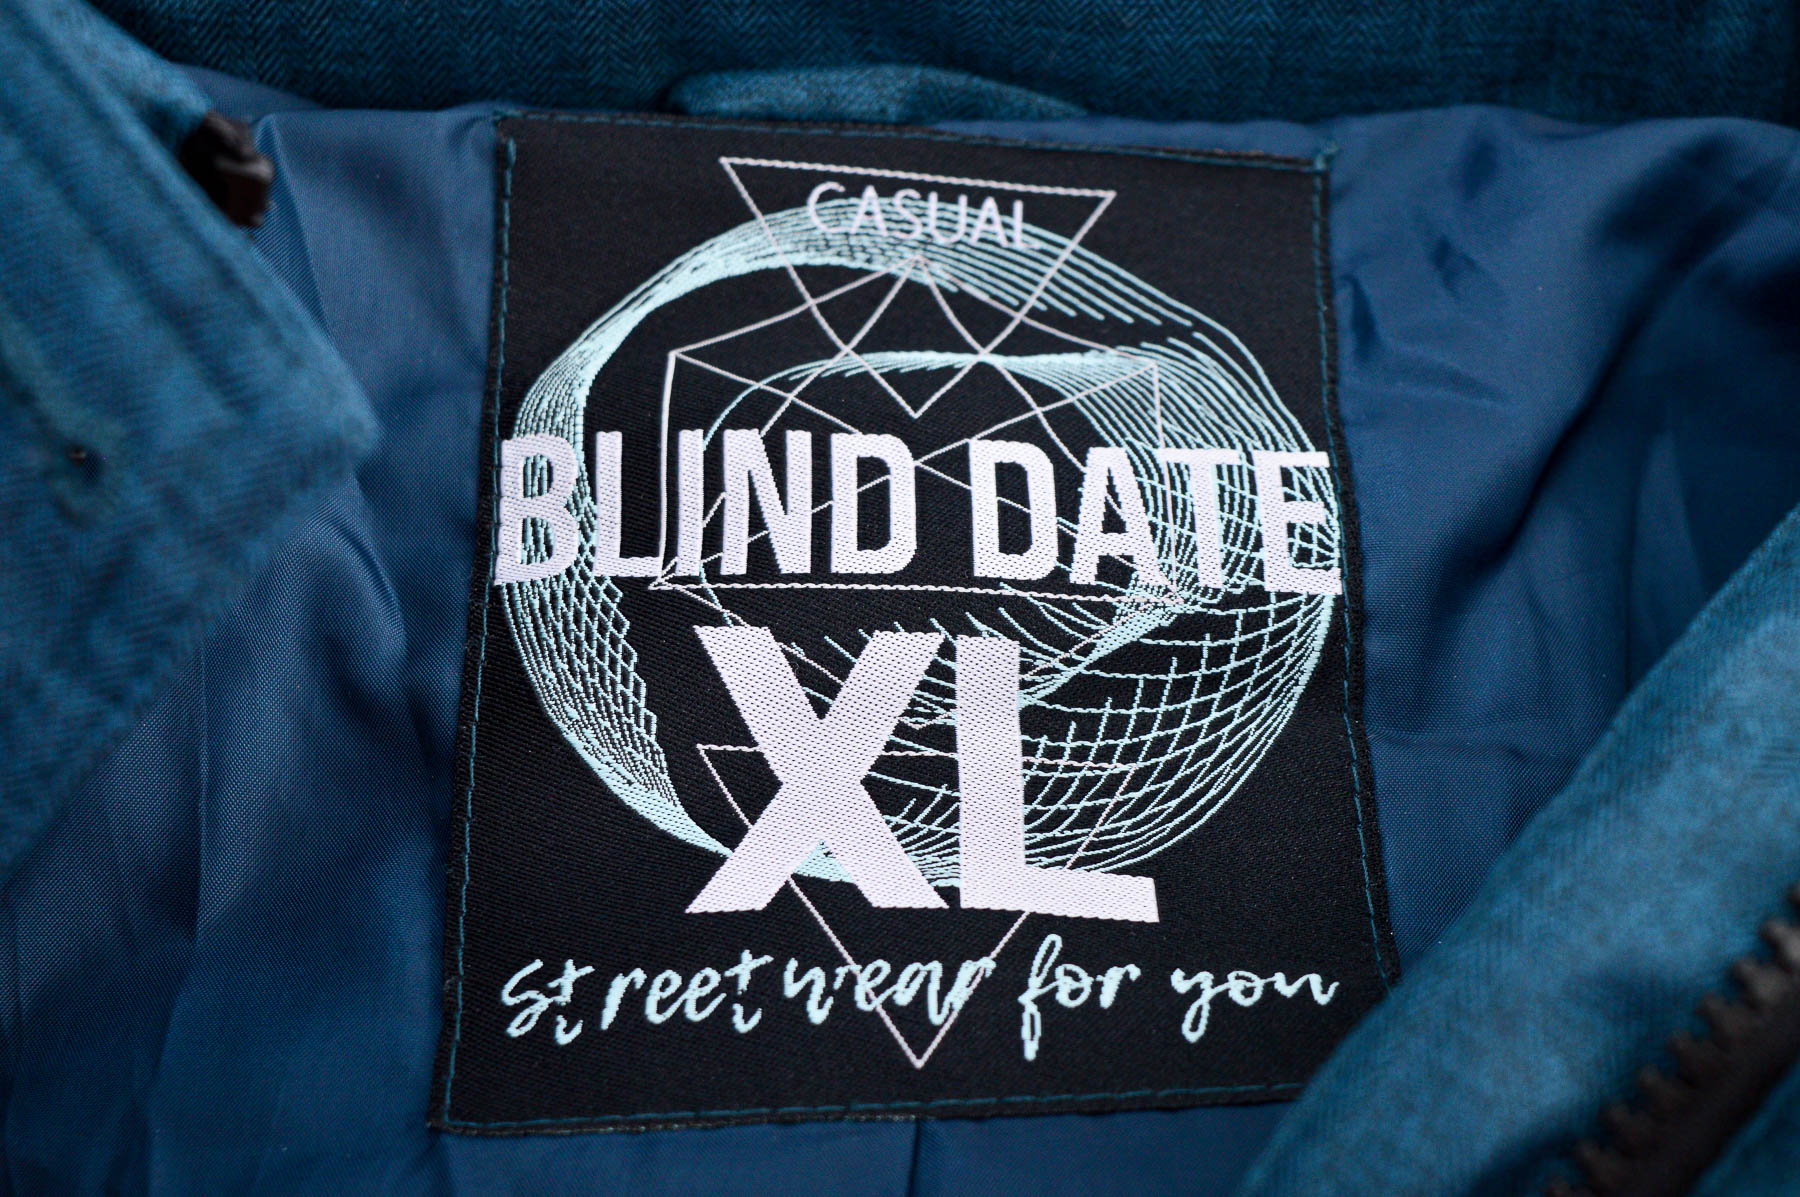 Female jacket - Blind Date - 2